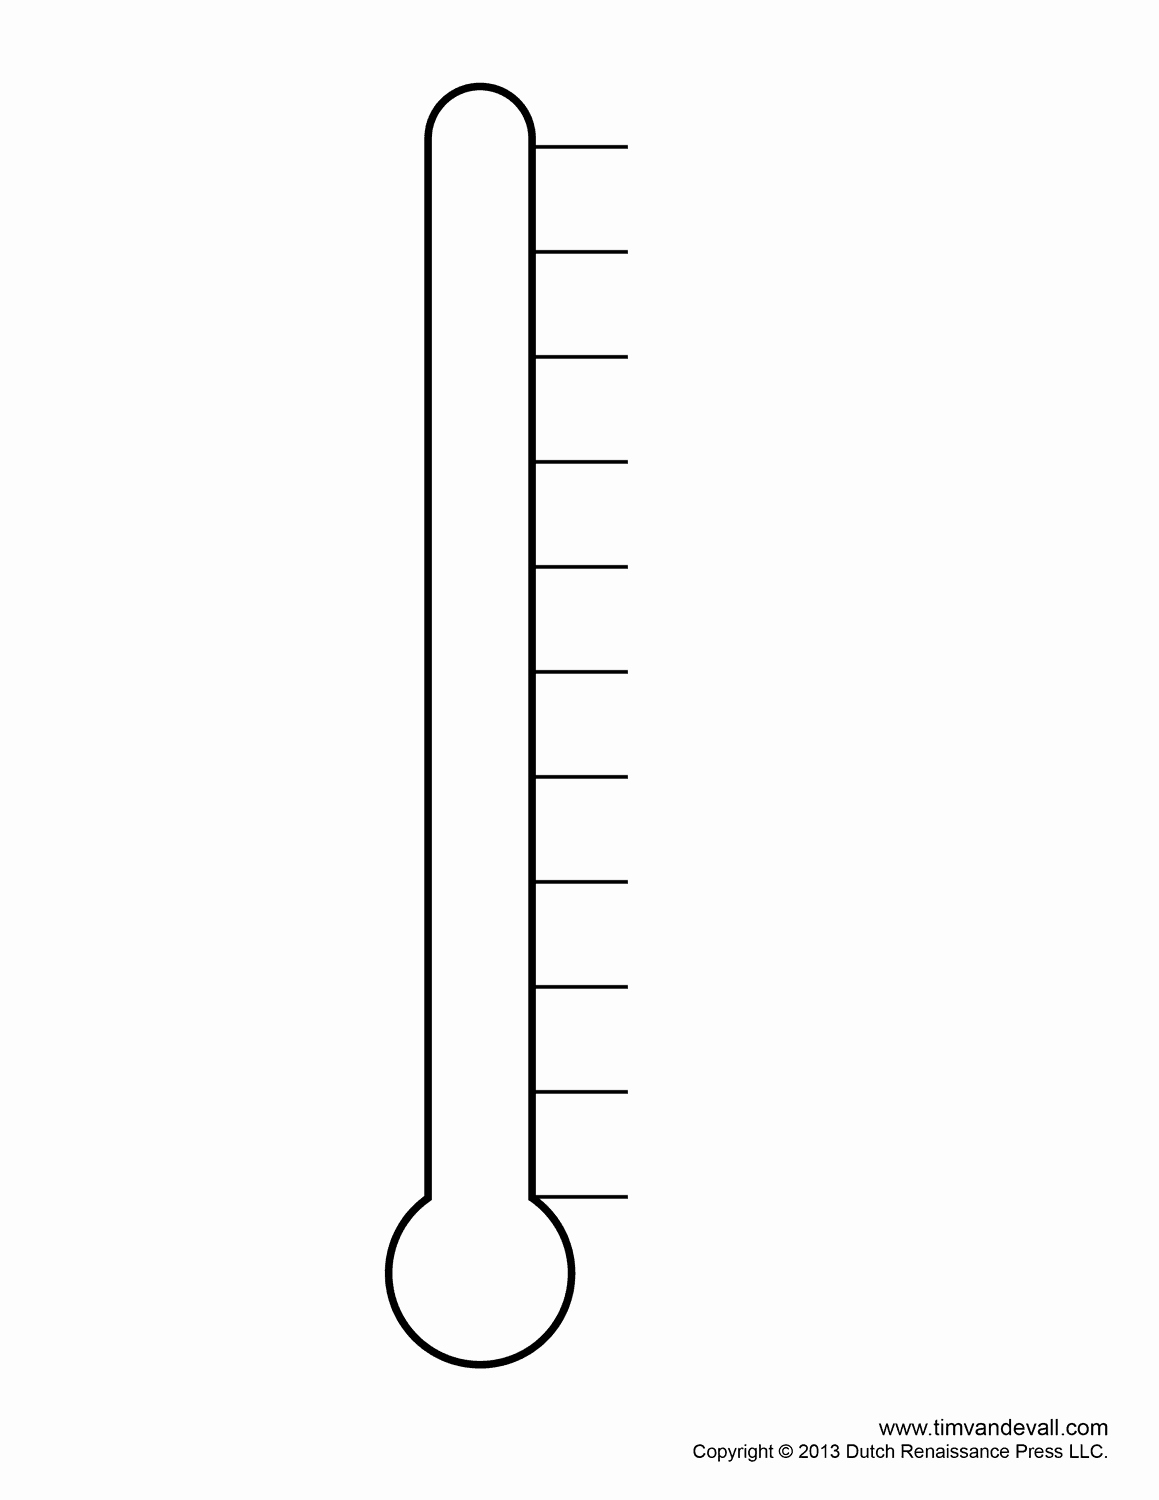 Printable thermometer Goal Beautiful Fundraising thermometer Templates for Fundraising events